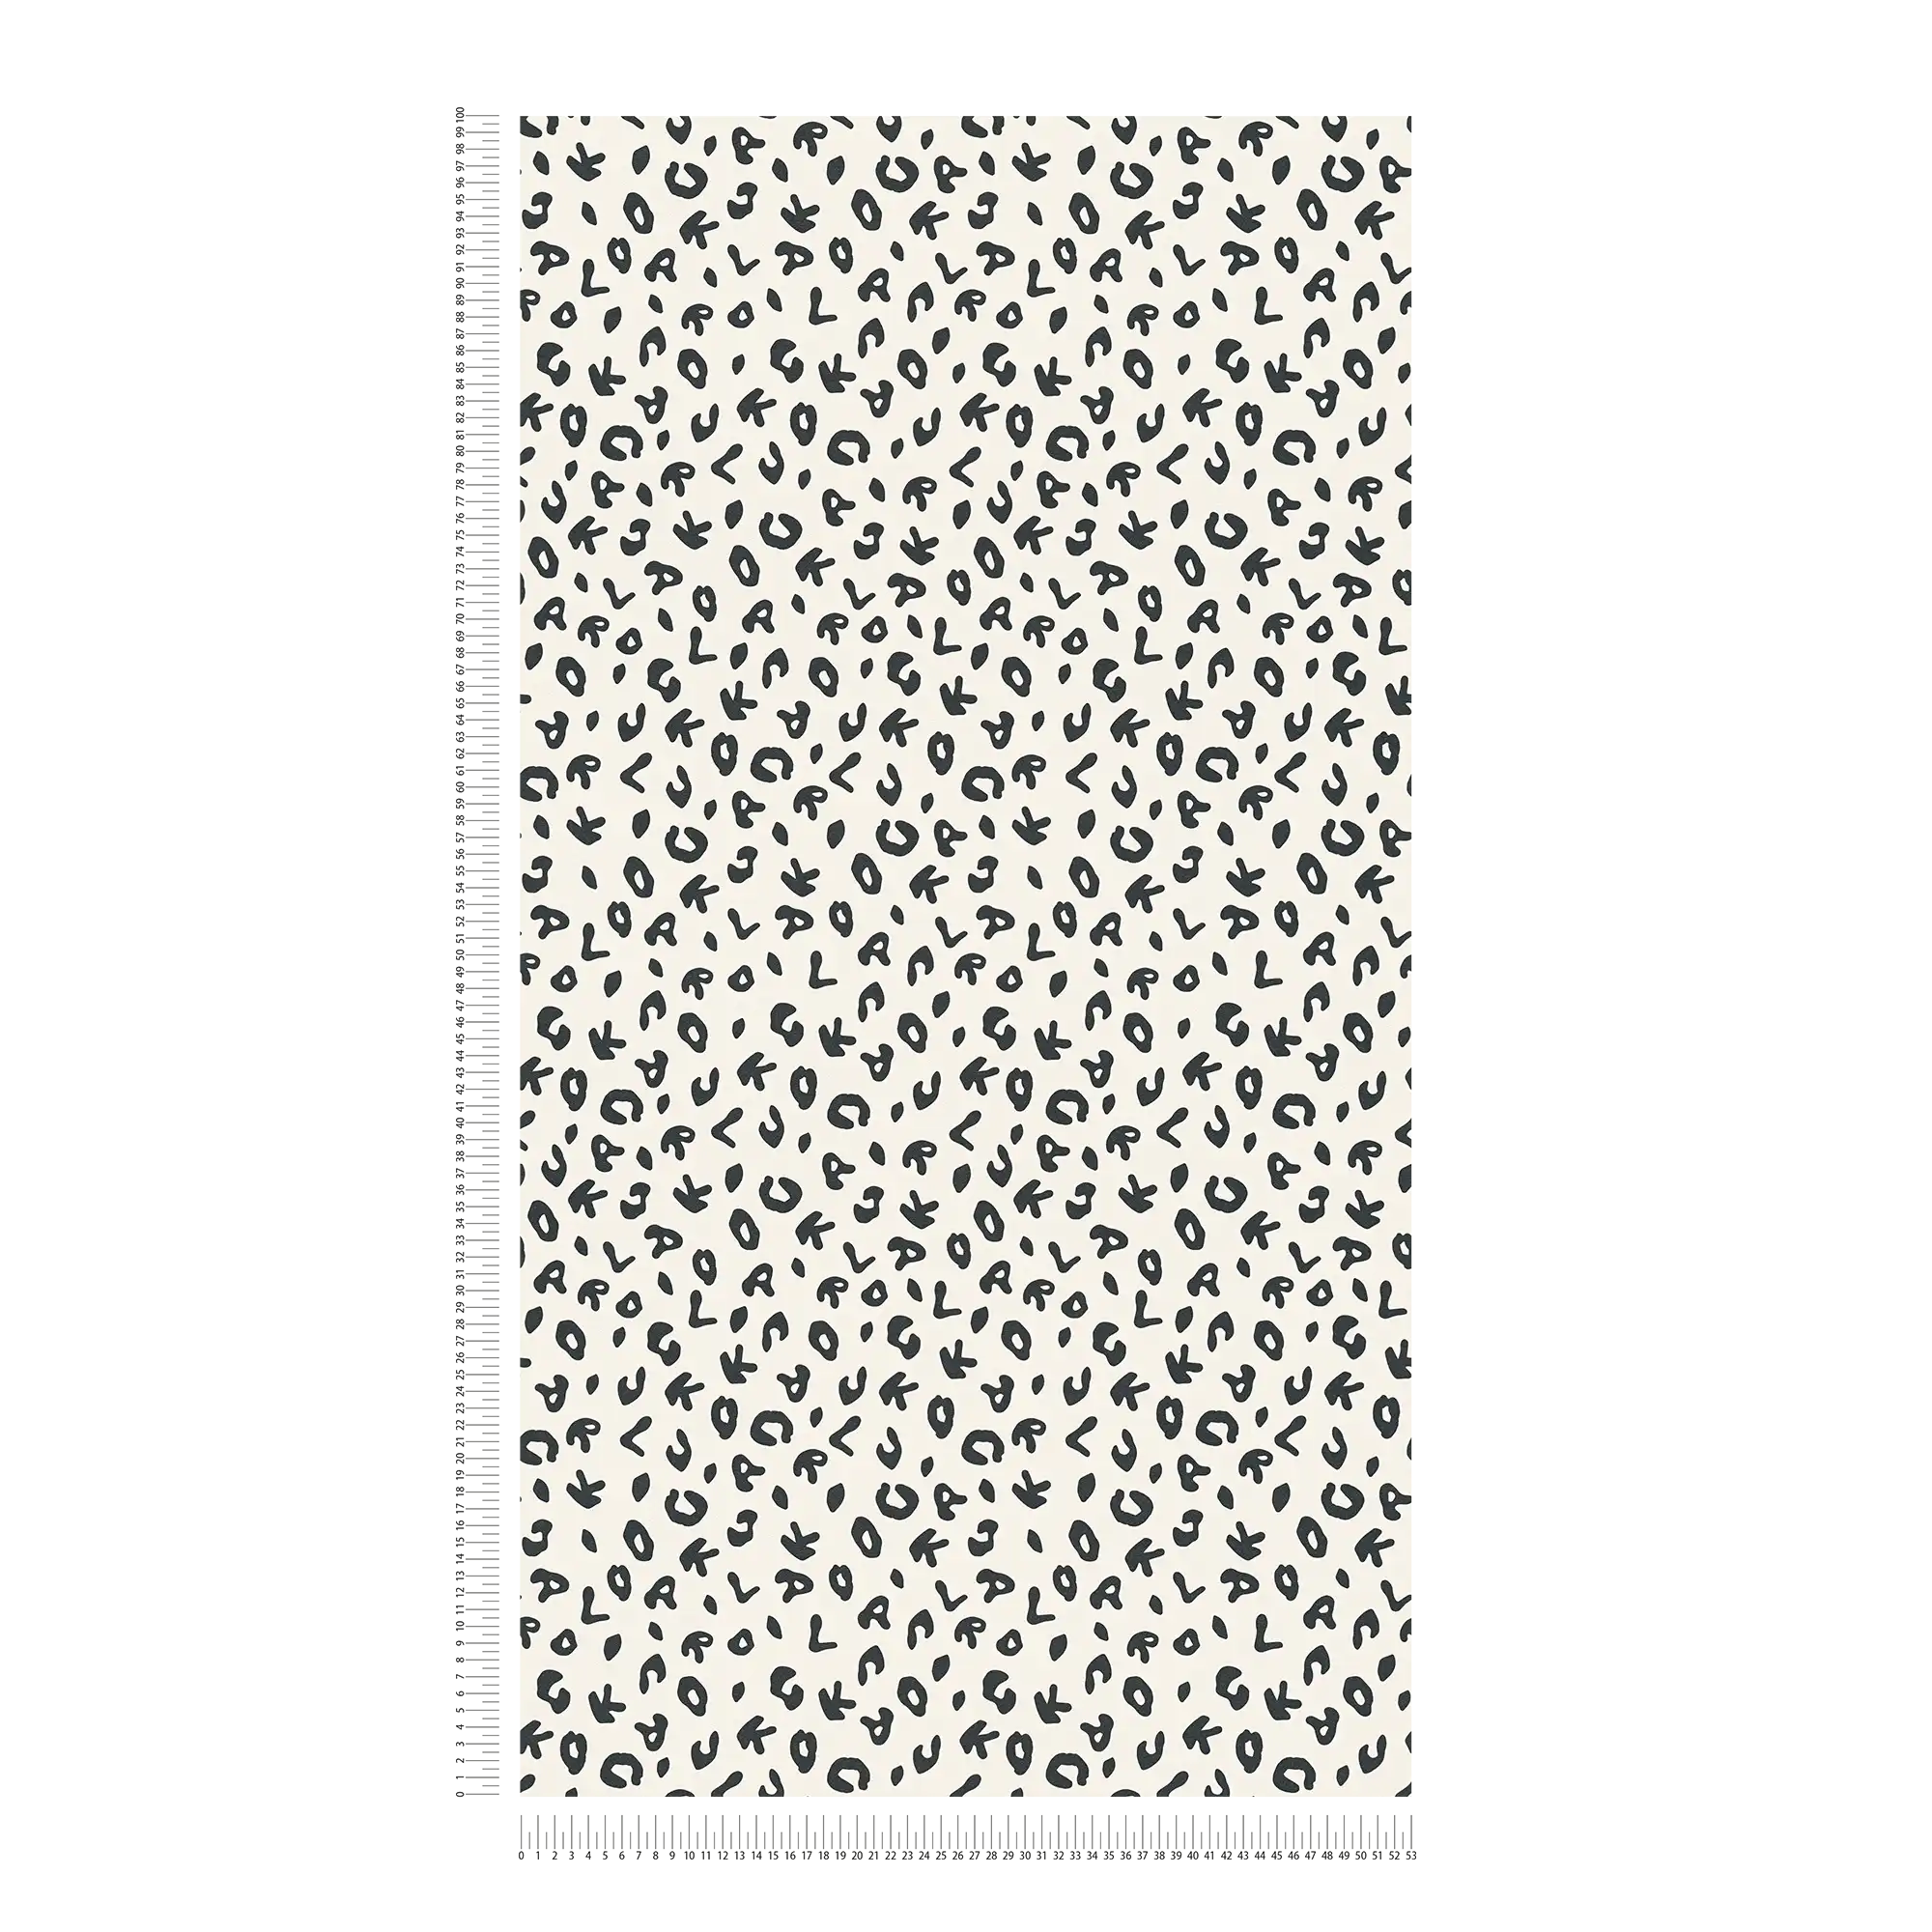             Karl LAGERFELD leopard print style wallpaper - Black, White
        